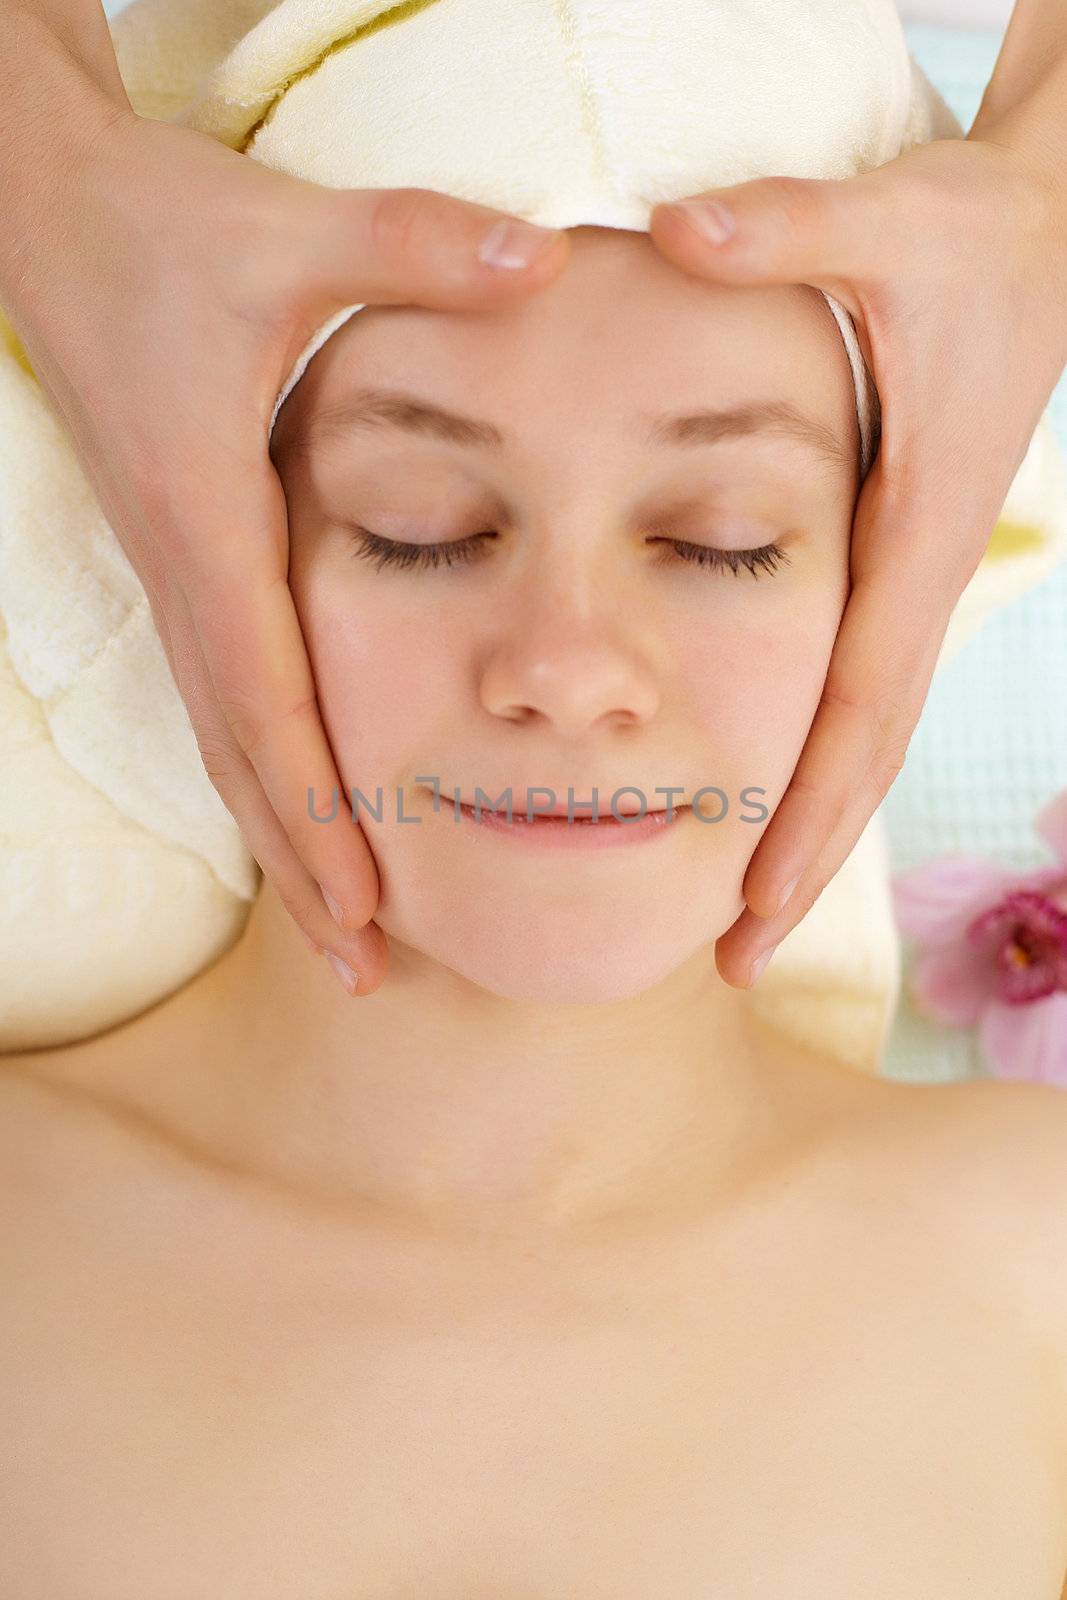 Man's hands do woman's face massage in salon